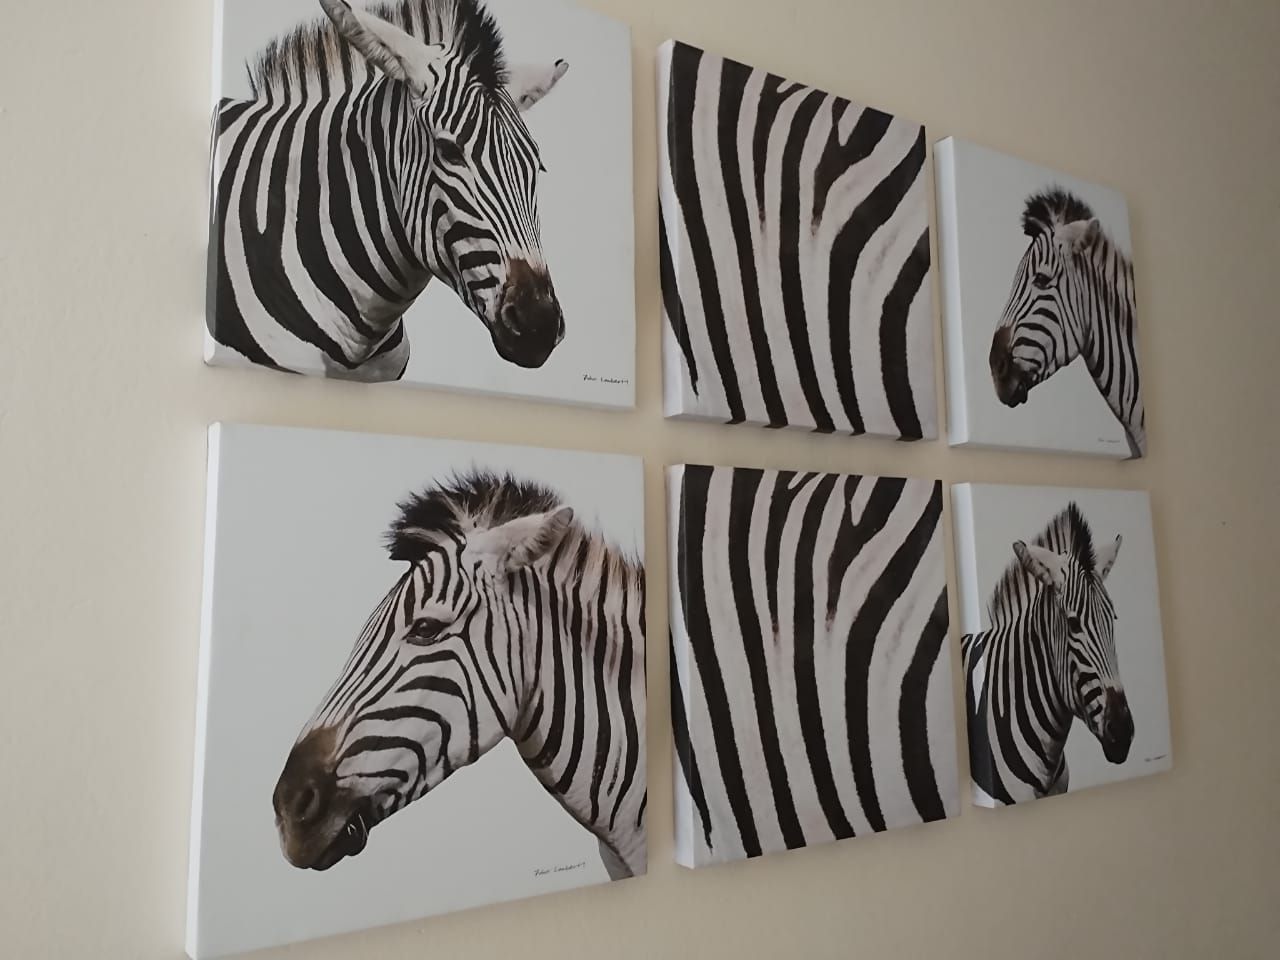 Ecotel Southgate Inn Meredale Johannesburg Gauteng South Africa Unsaturated, Zebra, Mammal, Animal, Herbivore, Art Gallery, Art, High Key